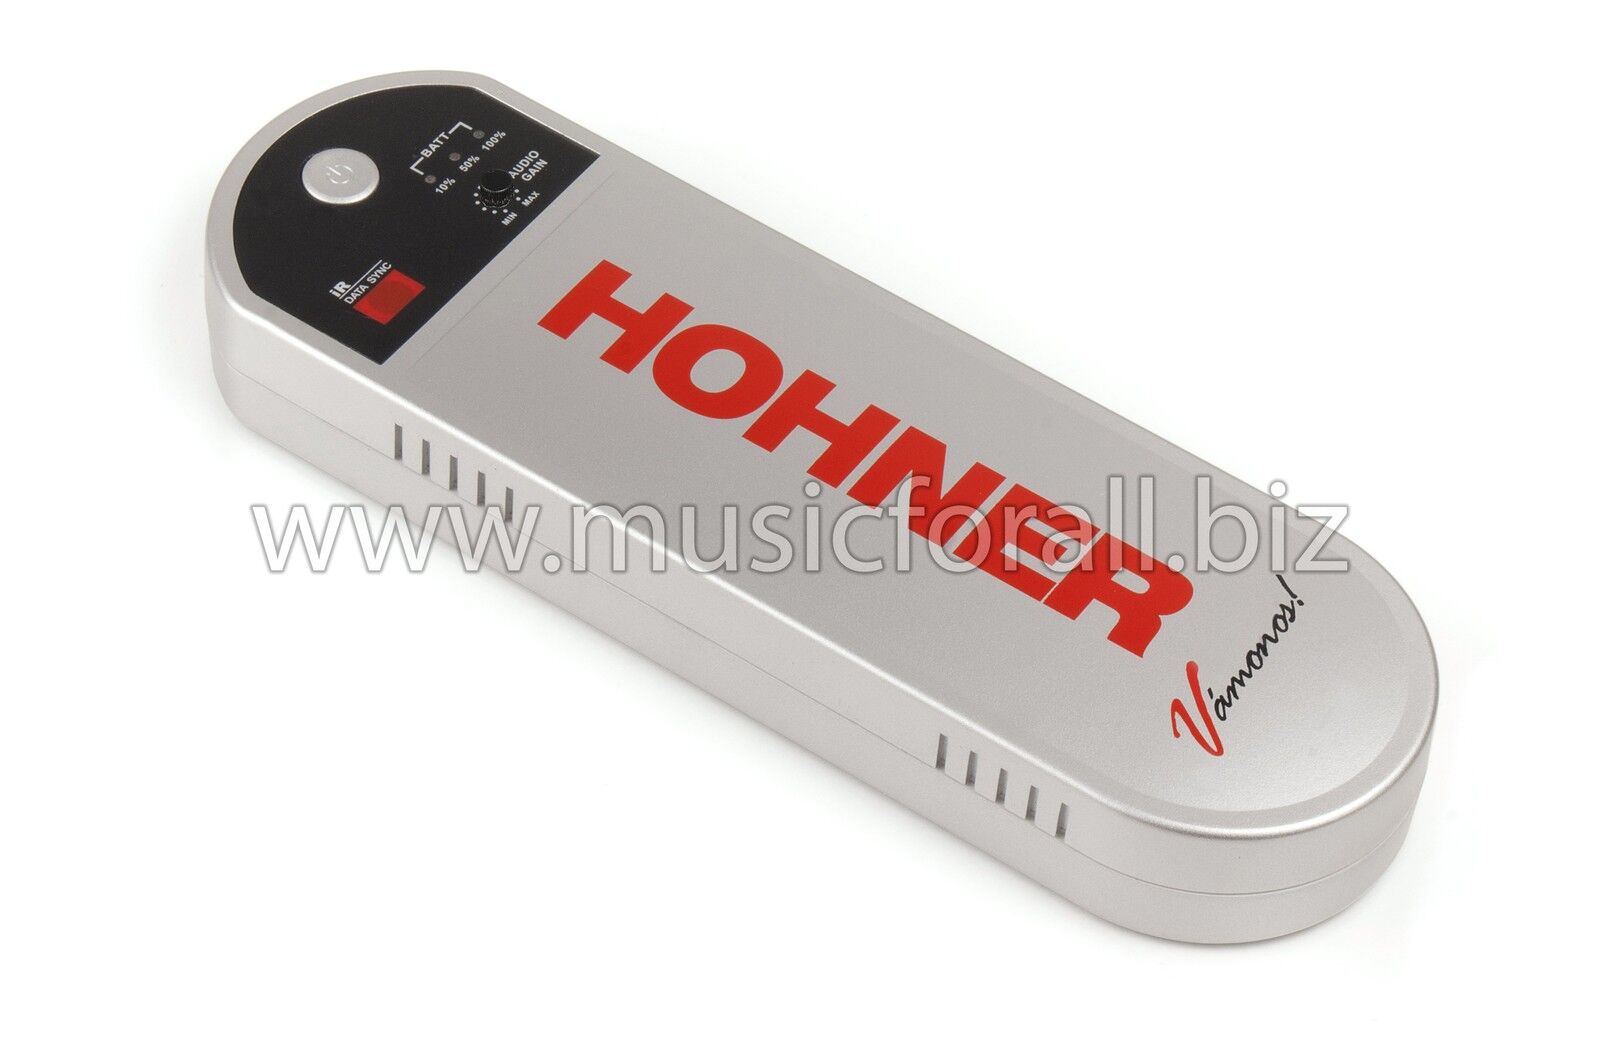 Hohner Vámonos Accordion Acordeon Wireless Microphone Mic LOWER PRICE Worldship